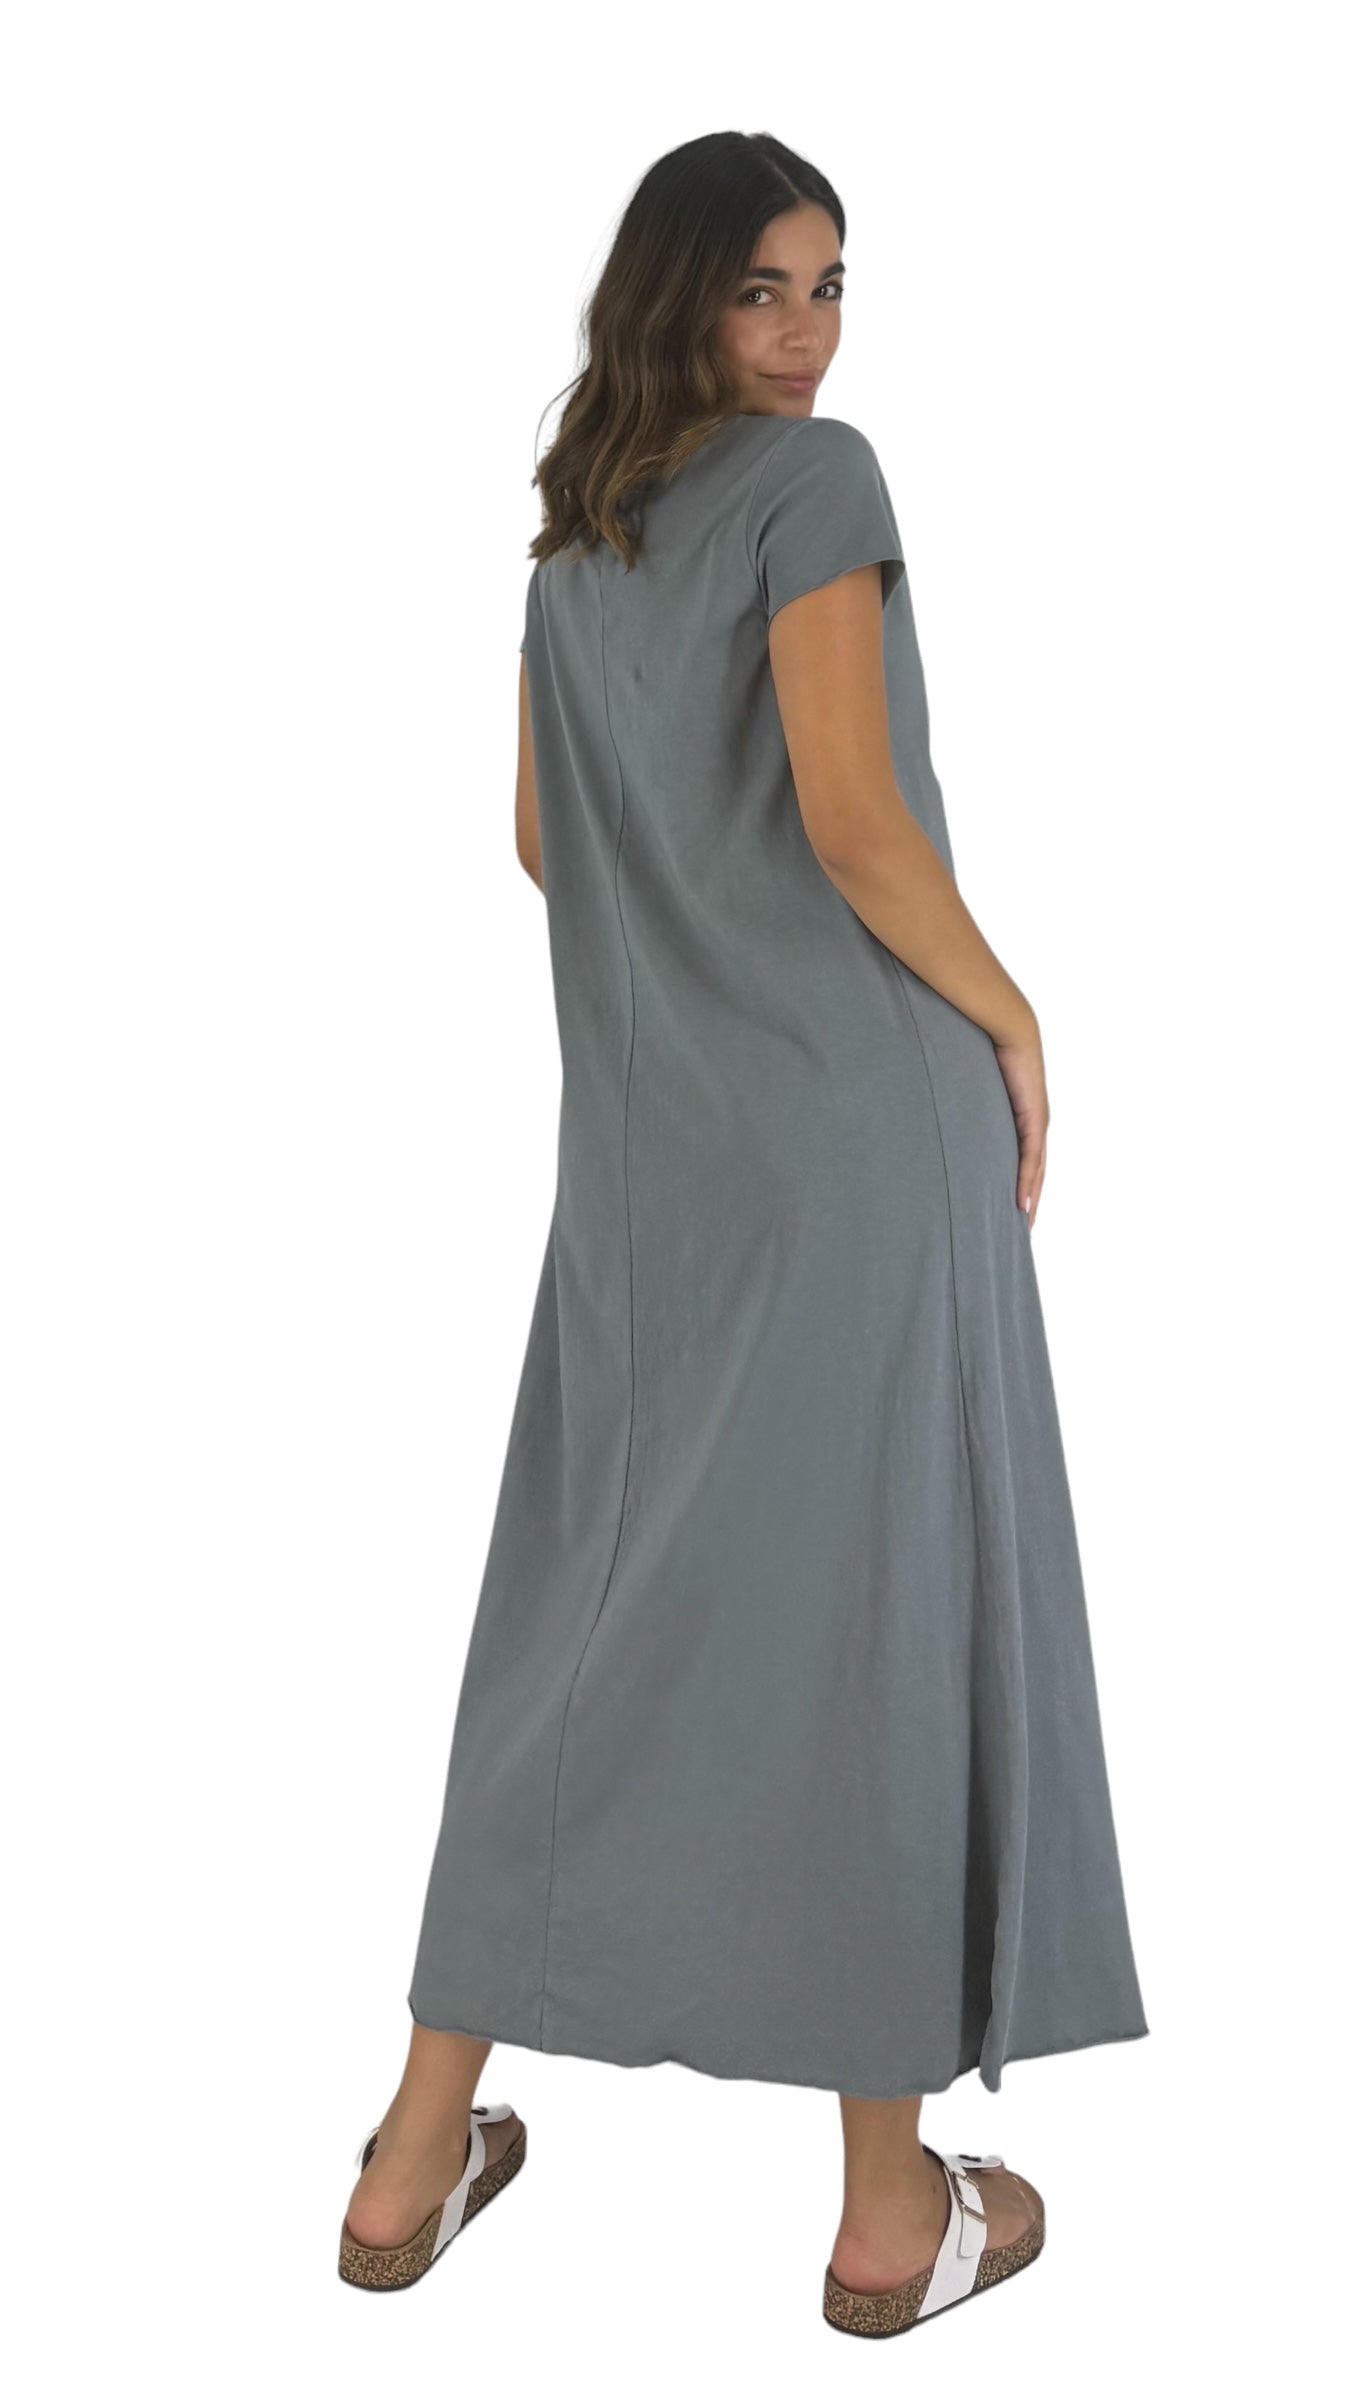 Sicilia grey dress